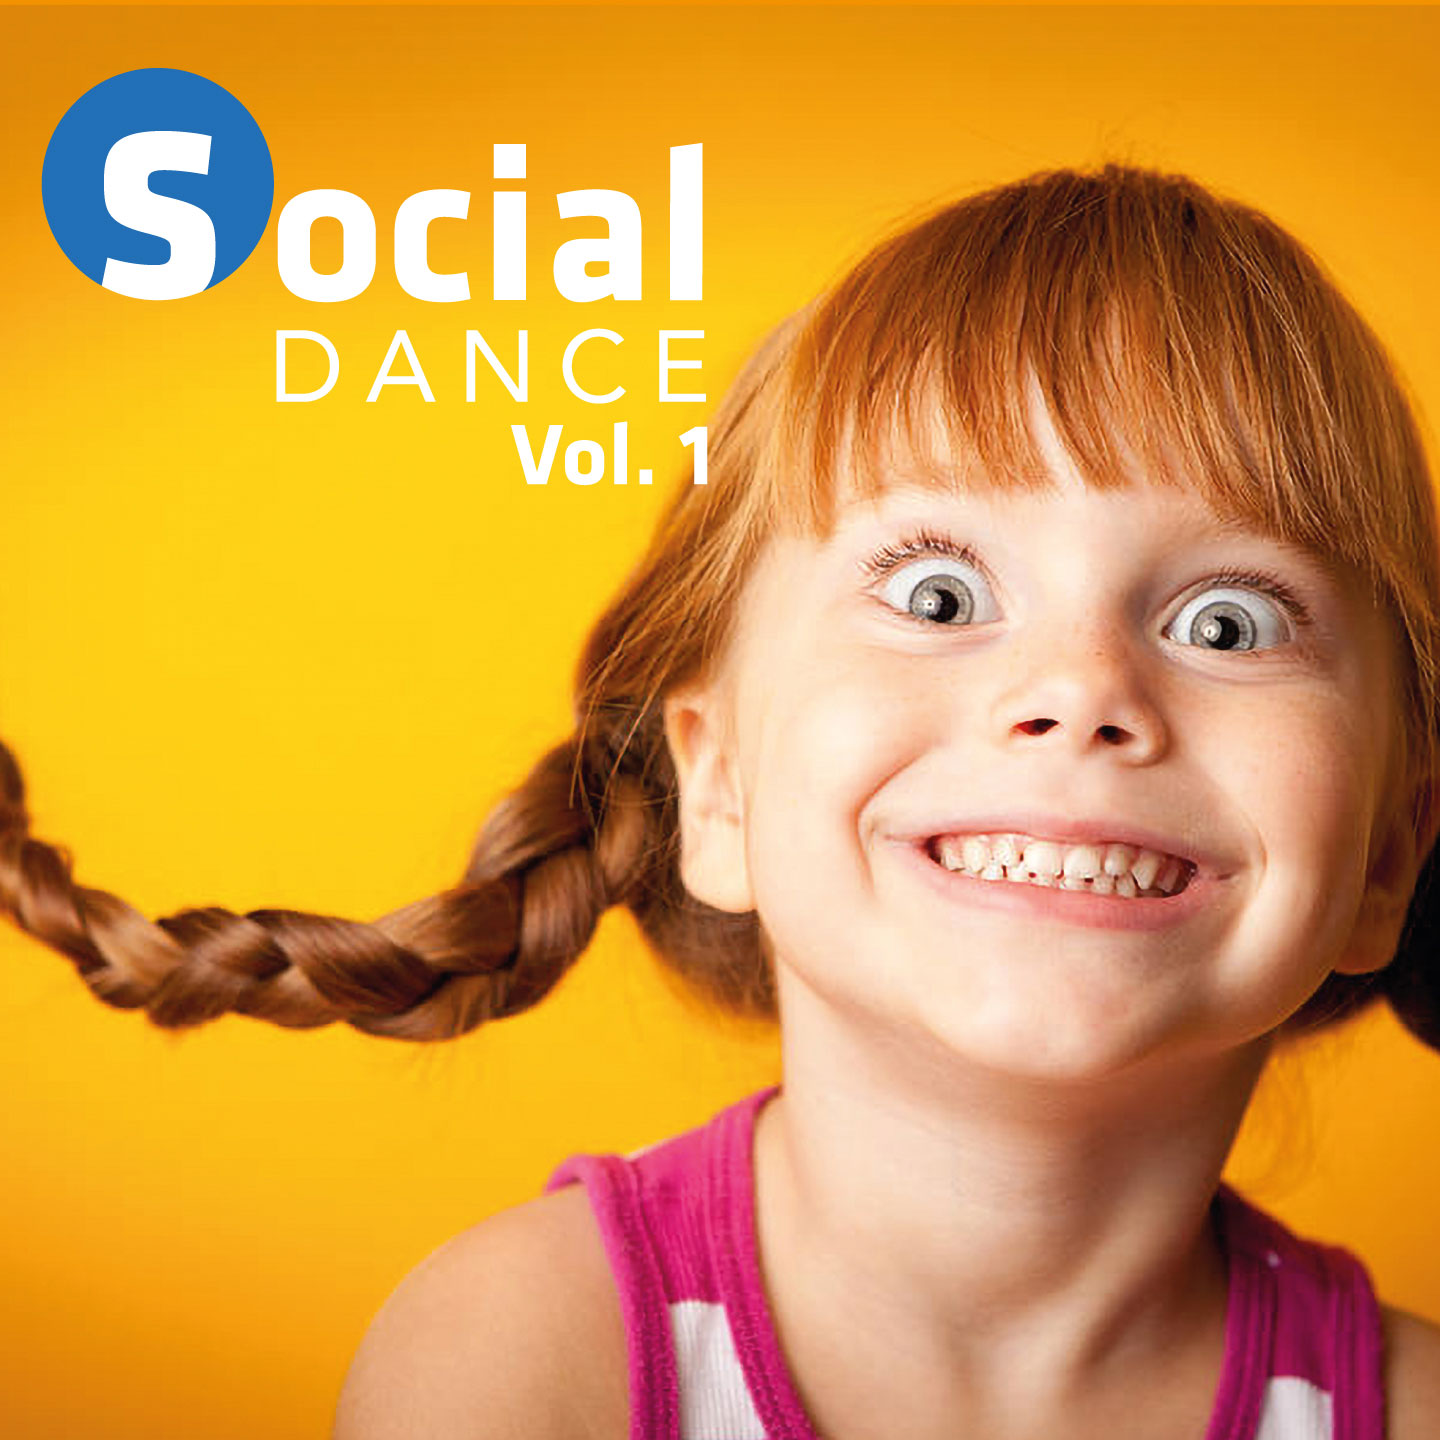 SOCIAL DANCE VOL. 1